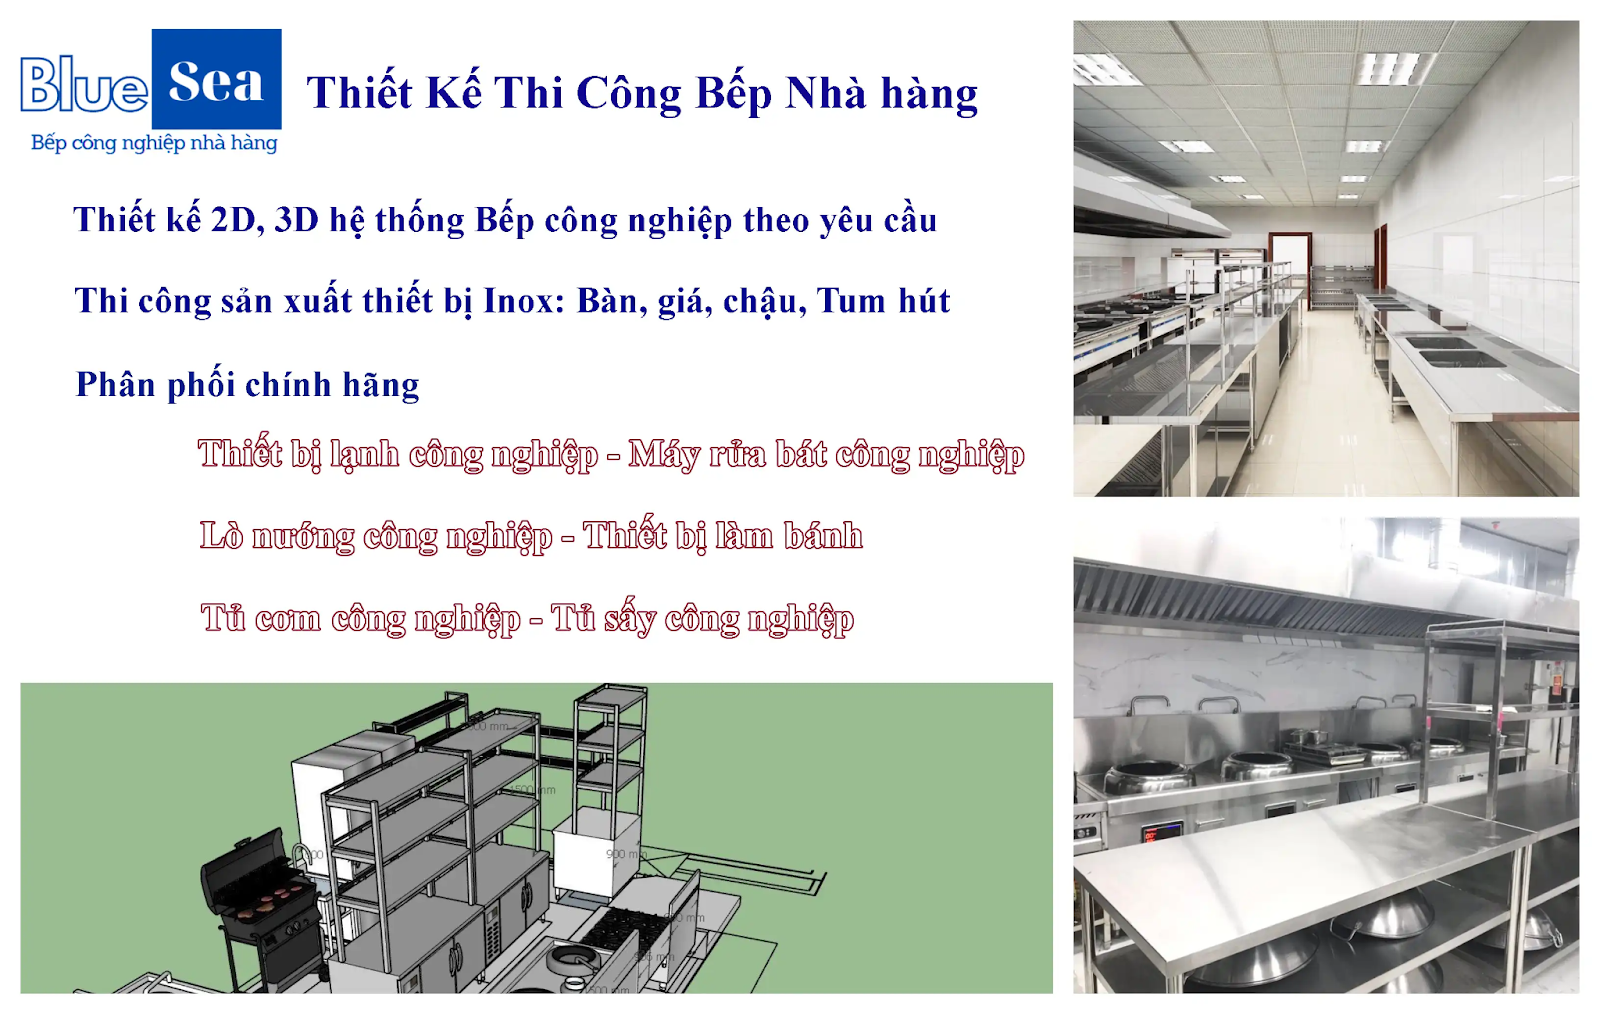 thiet-ke-phan-phoi-thi-cong-lap-dat-thiet-bi-bep-cong-nghiep-nha-hang-5